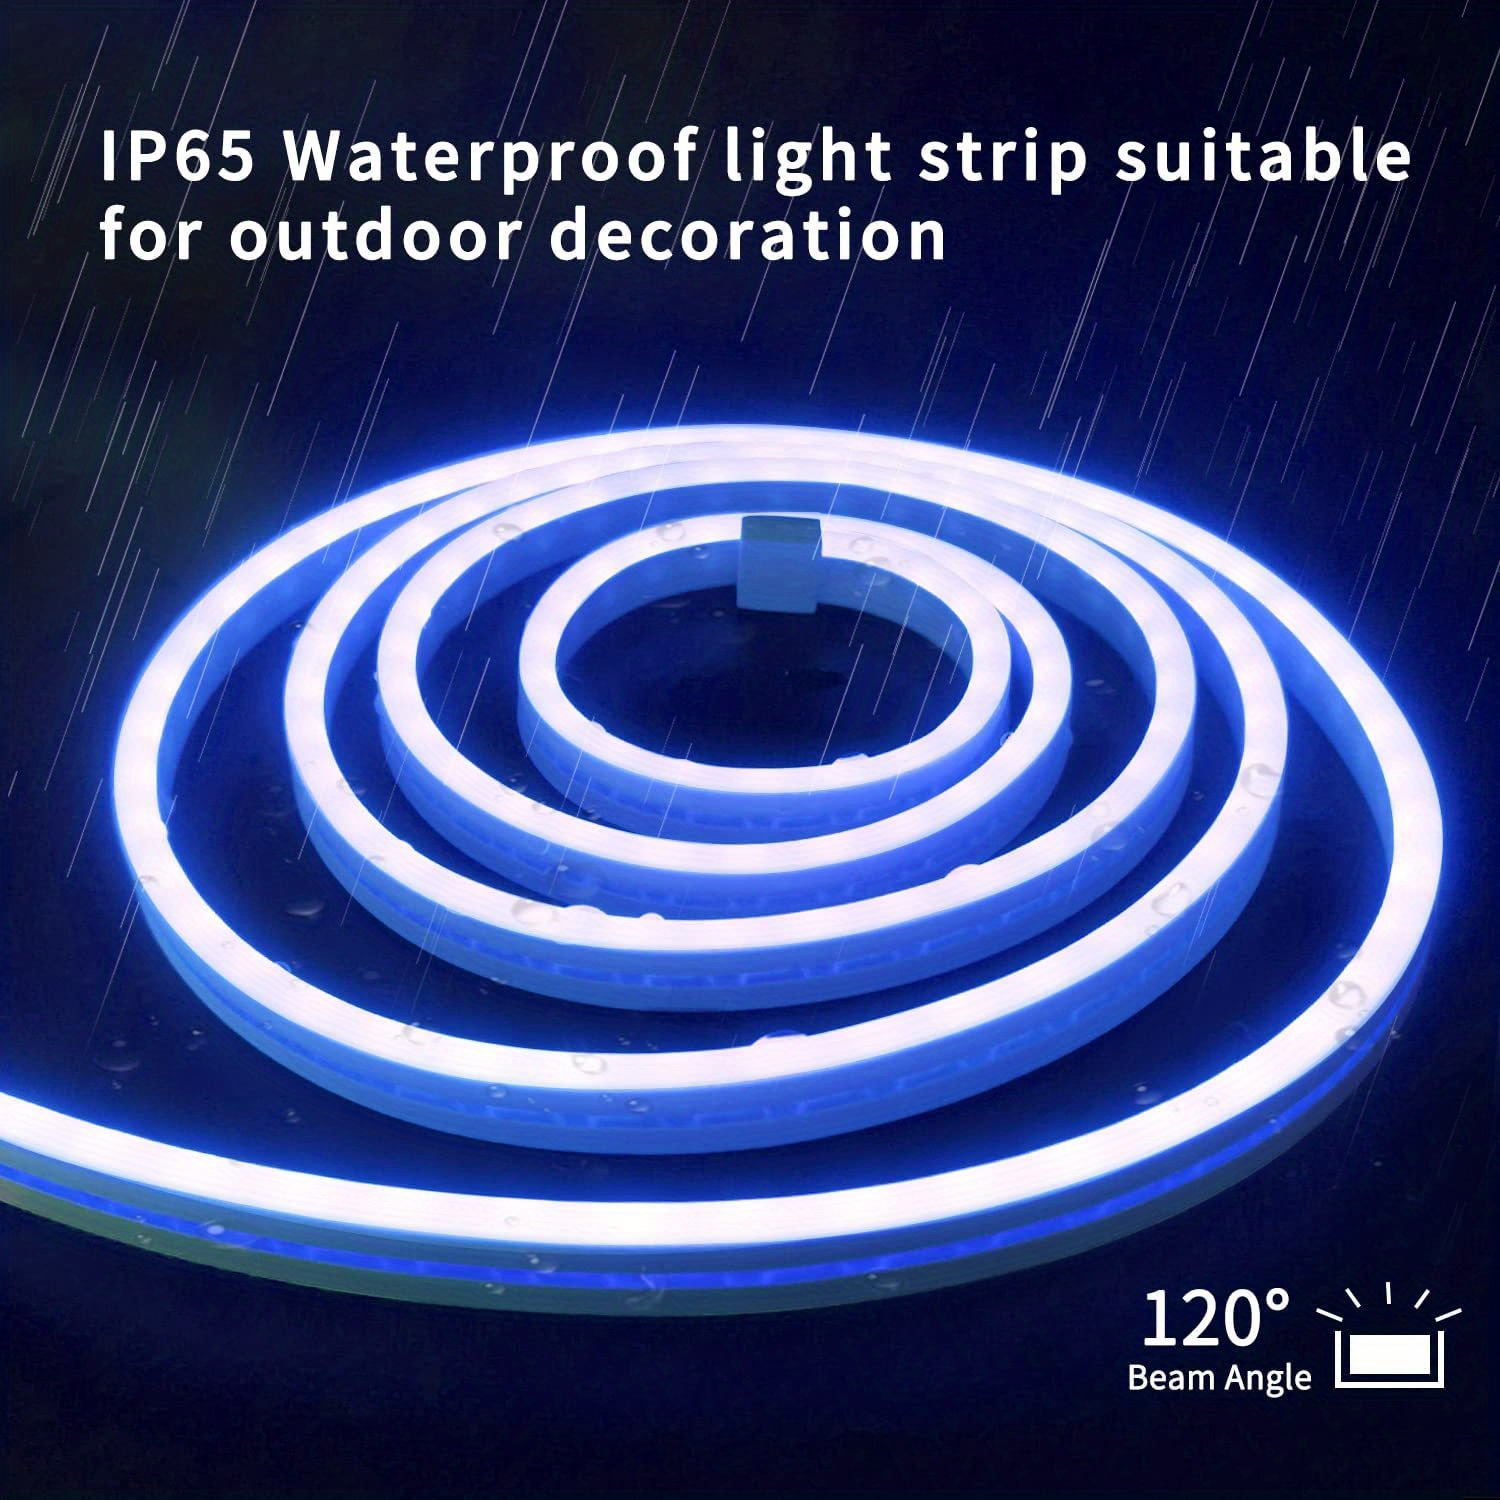 5v Usb Neon Light Usb Led Strip Lights Waterproof Flexible - Temu